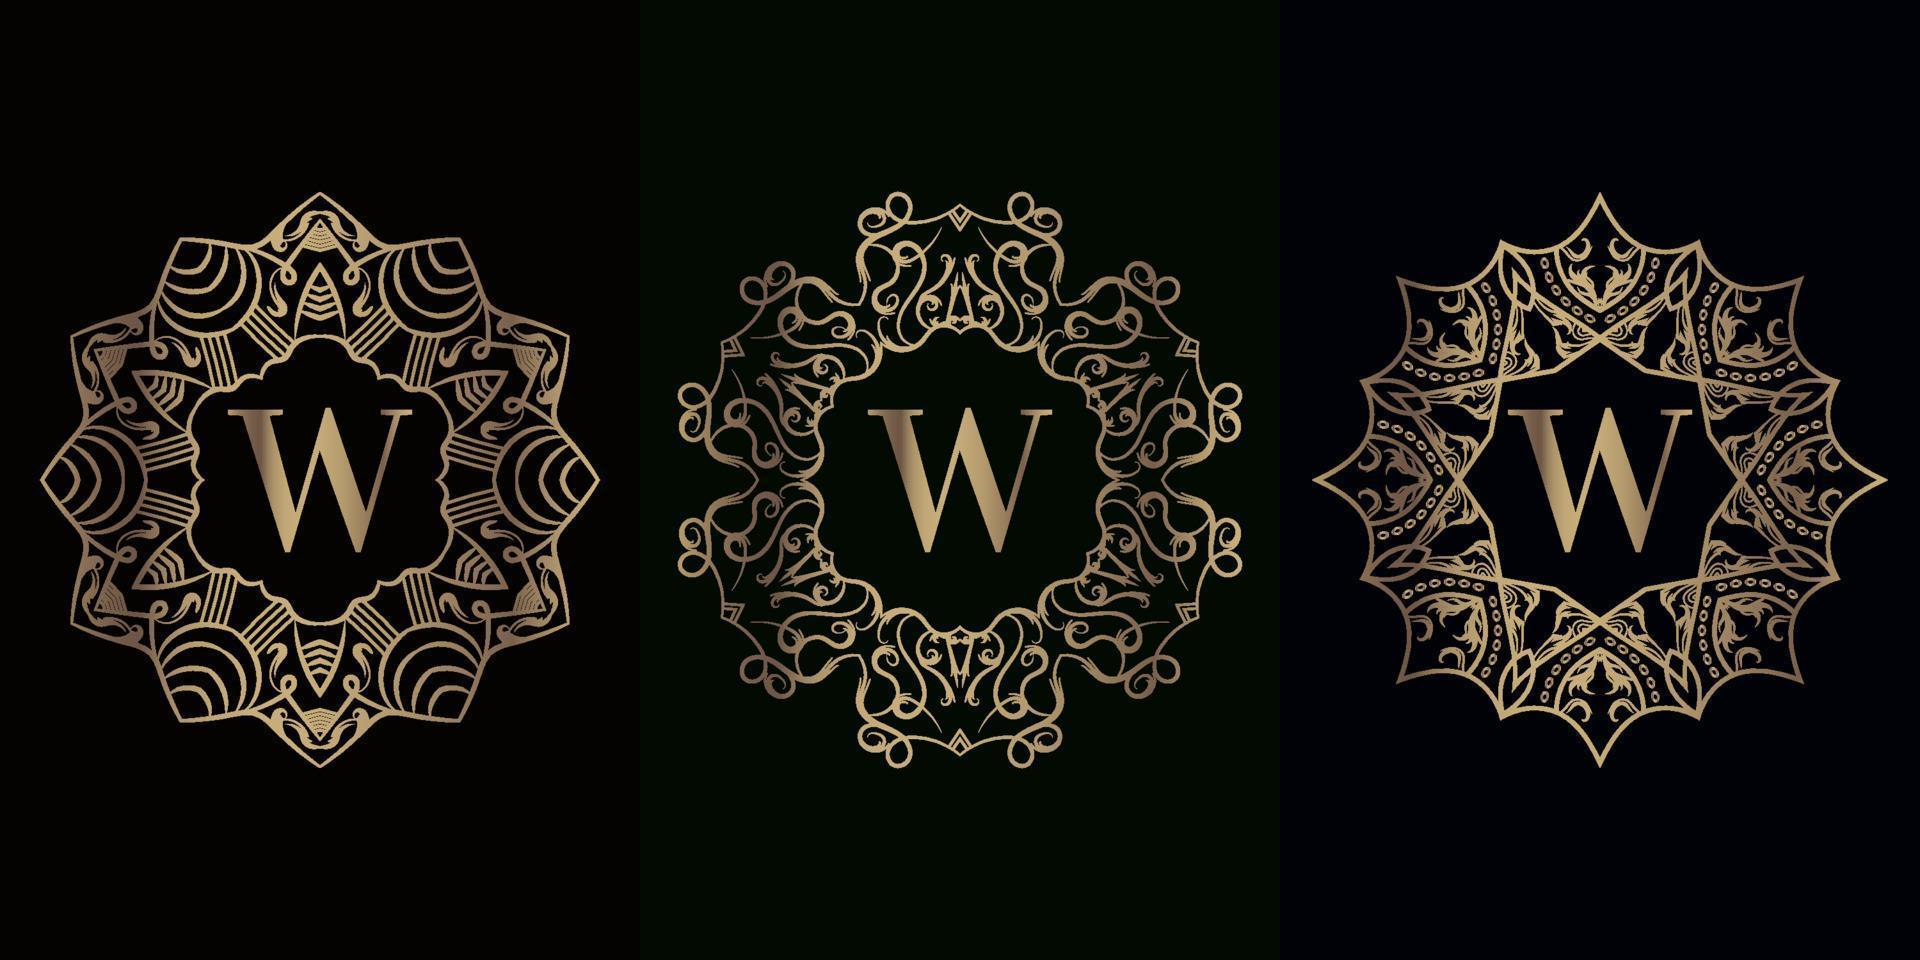 verzameling van logo initial w met luxe mandala ornament frame vector